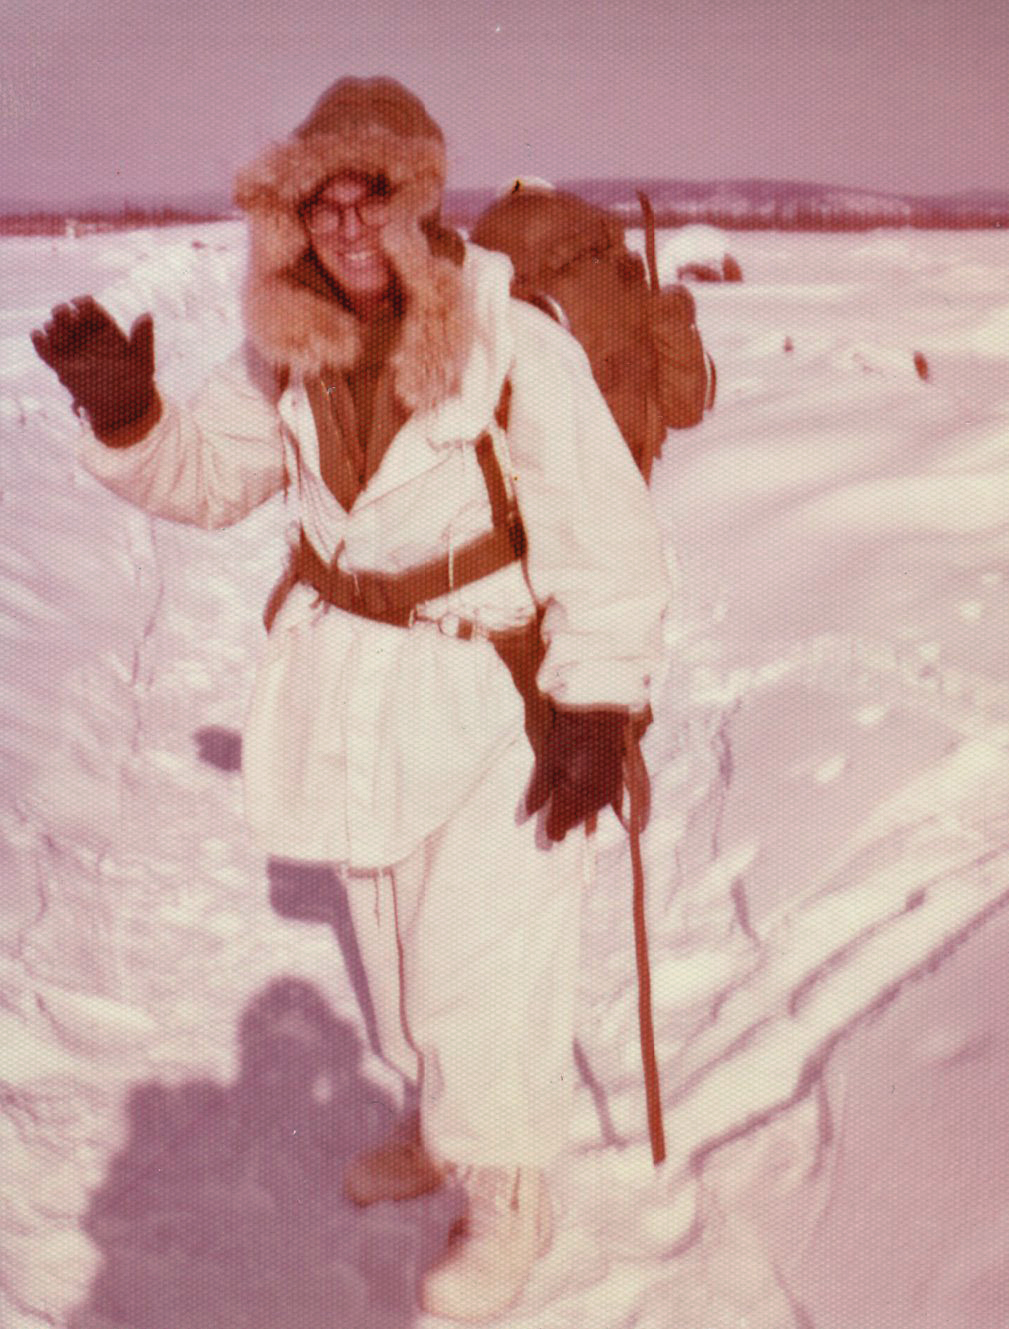 Stephen Terry in Alaska in 1975.